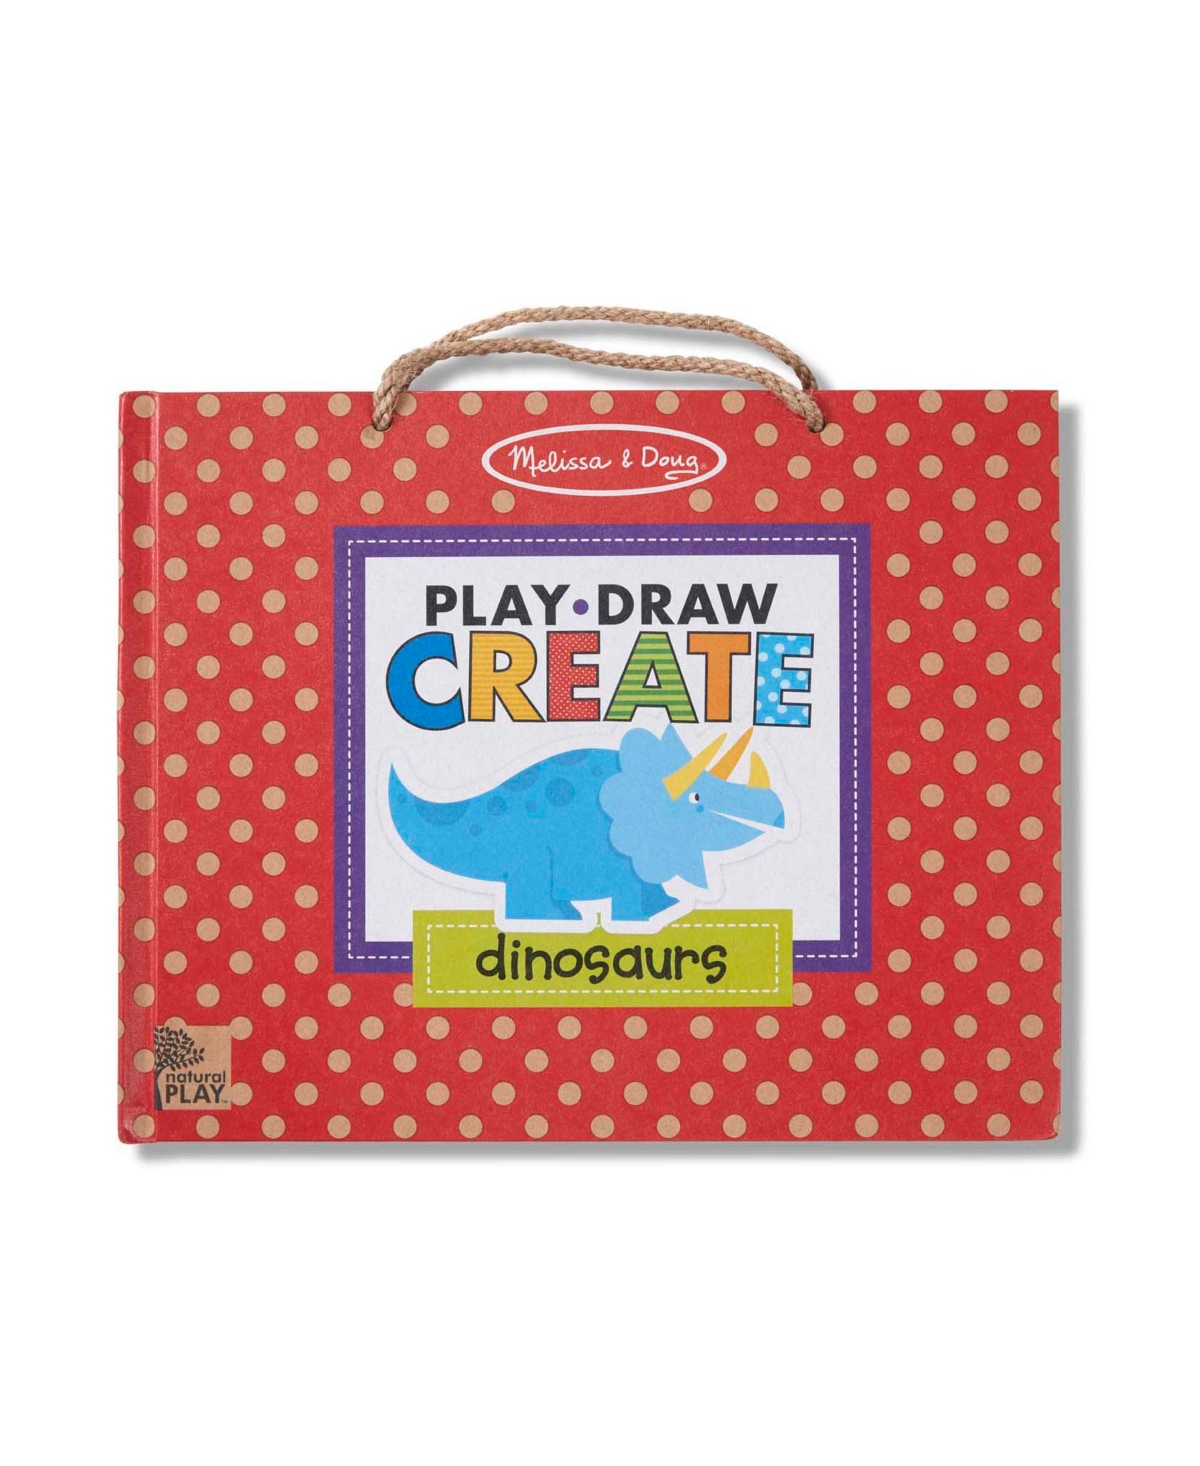 Play, Draw, Create - Dinosaurs